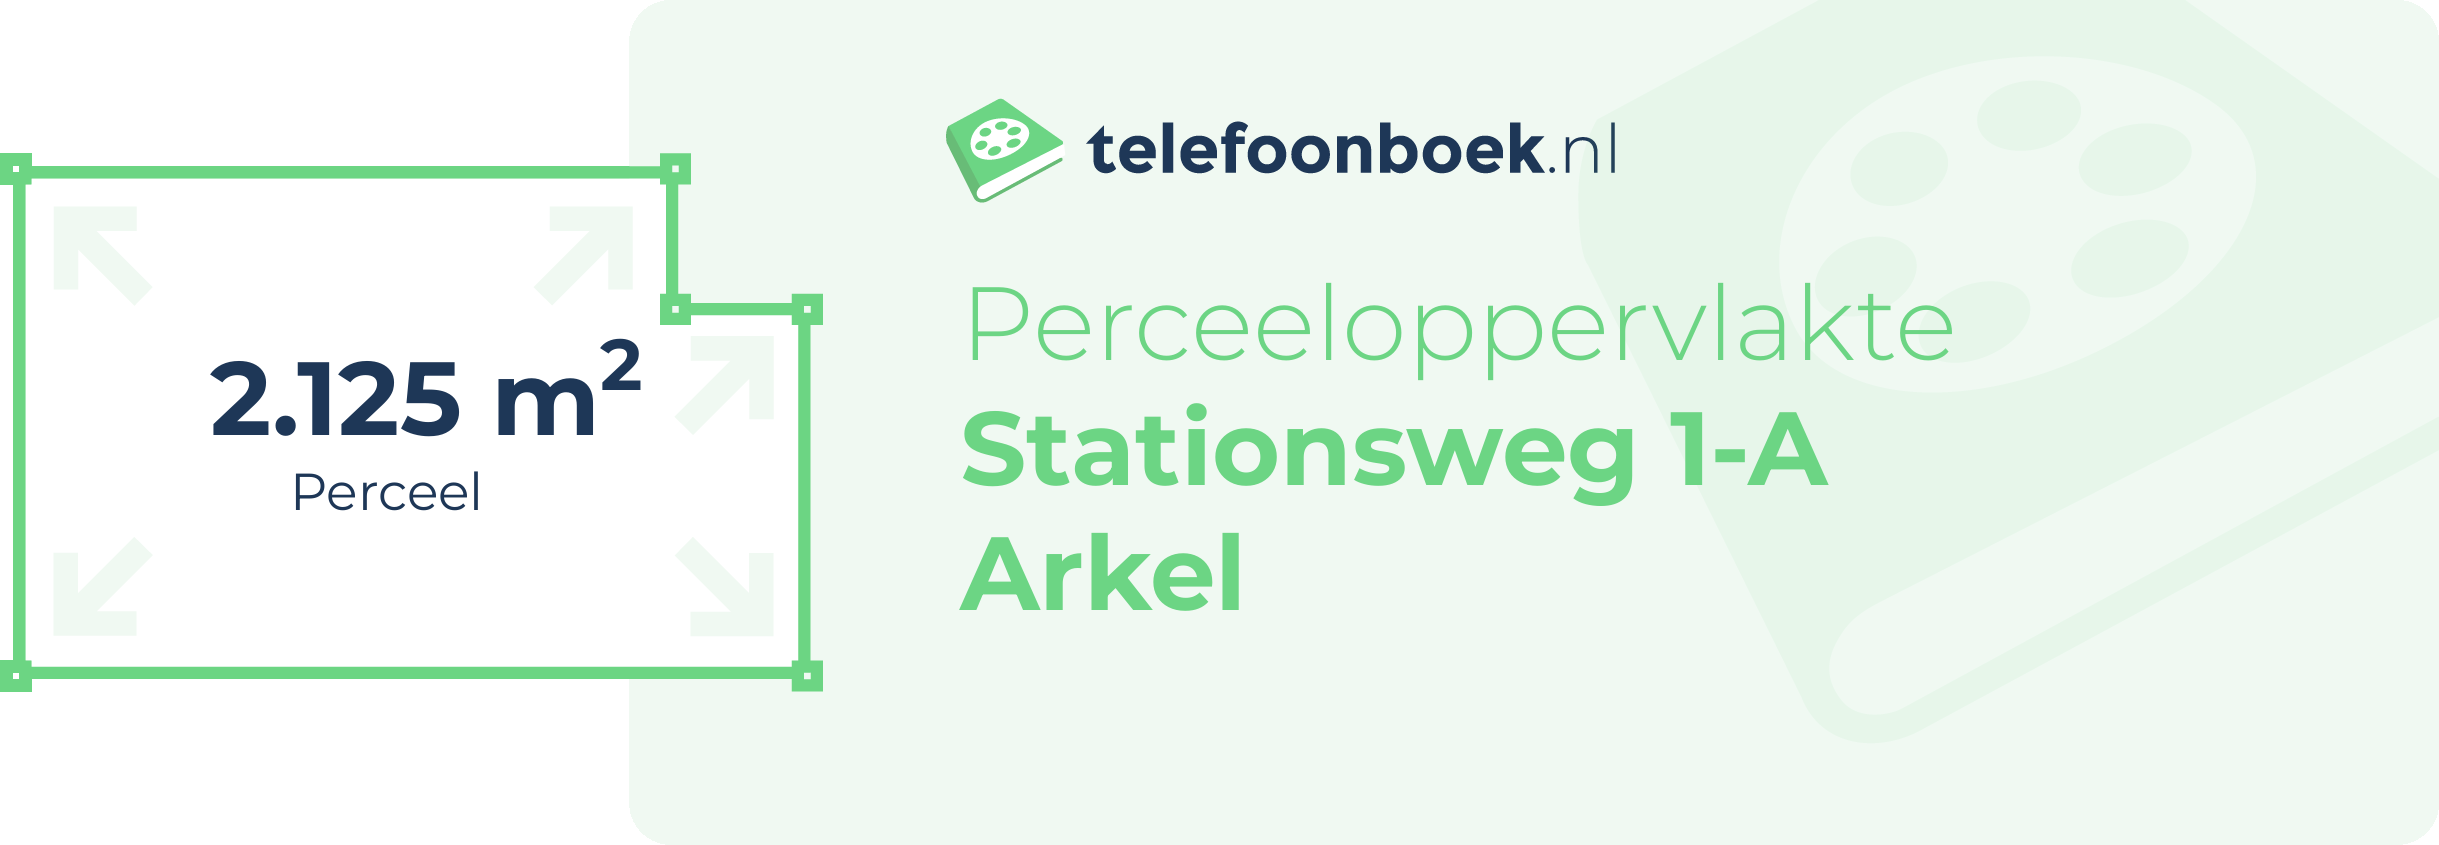 Perceeloppervlakte Stationsweg 1-A Arkel